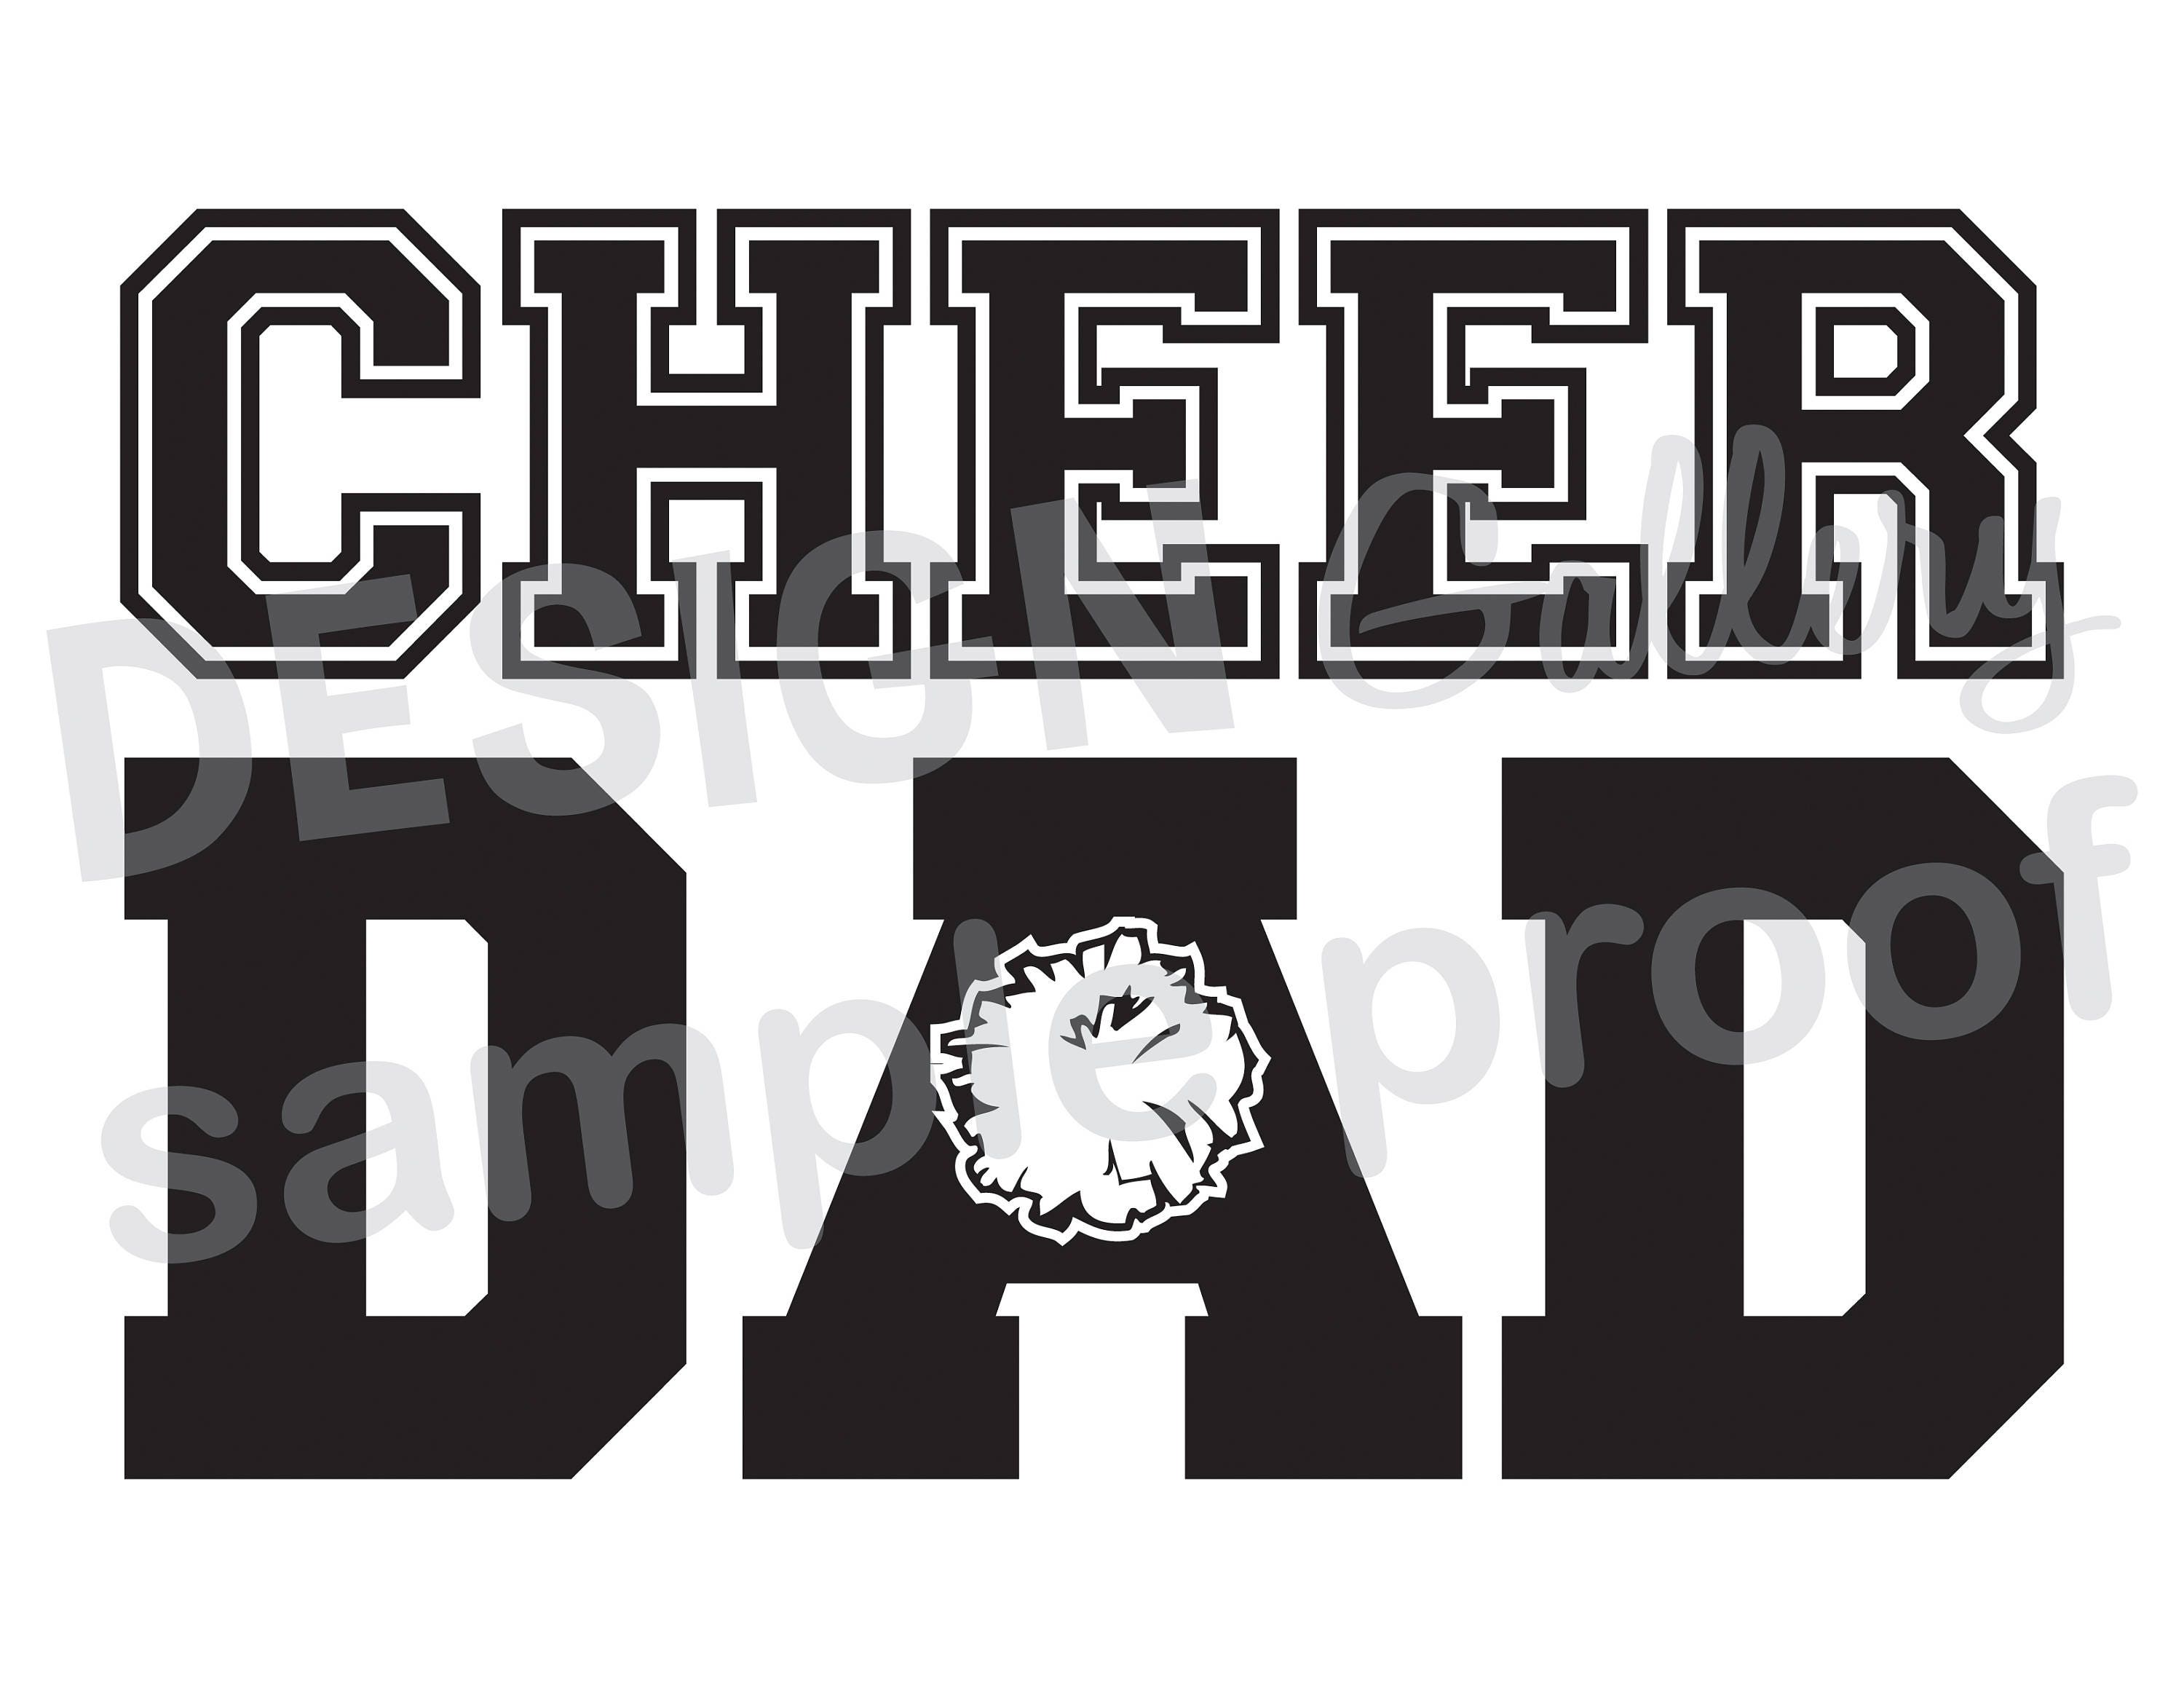 Download Cheer Dad DIY Instant Download JPG image & SVG cut